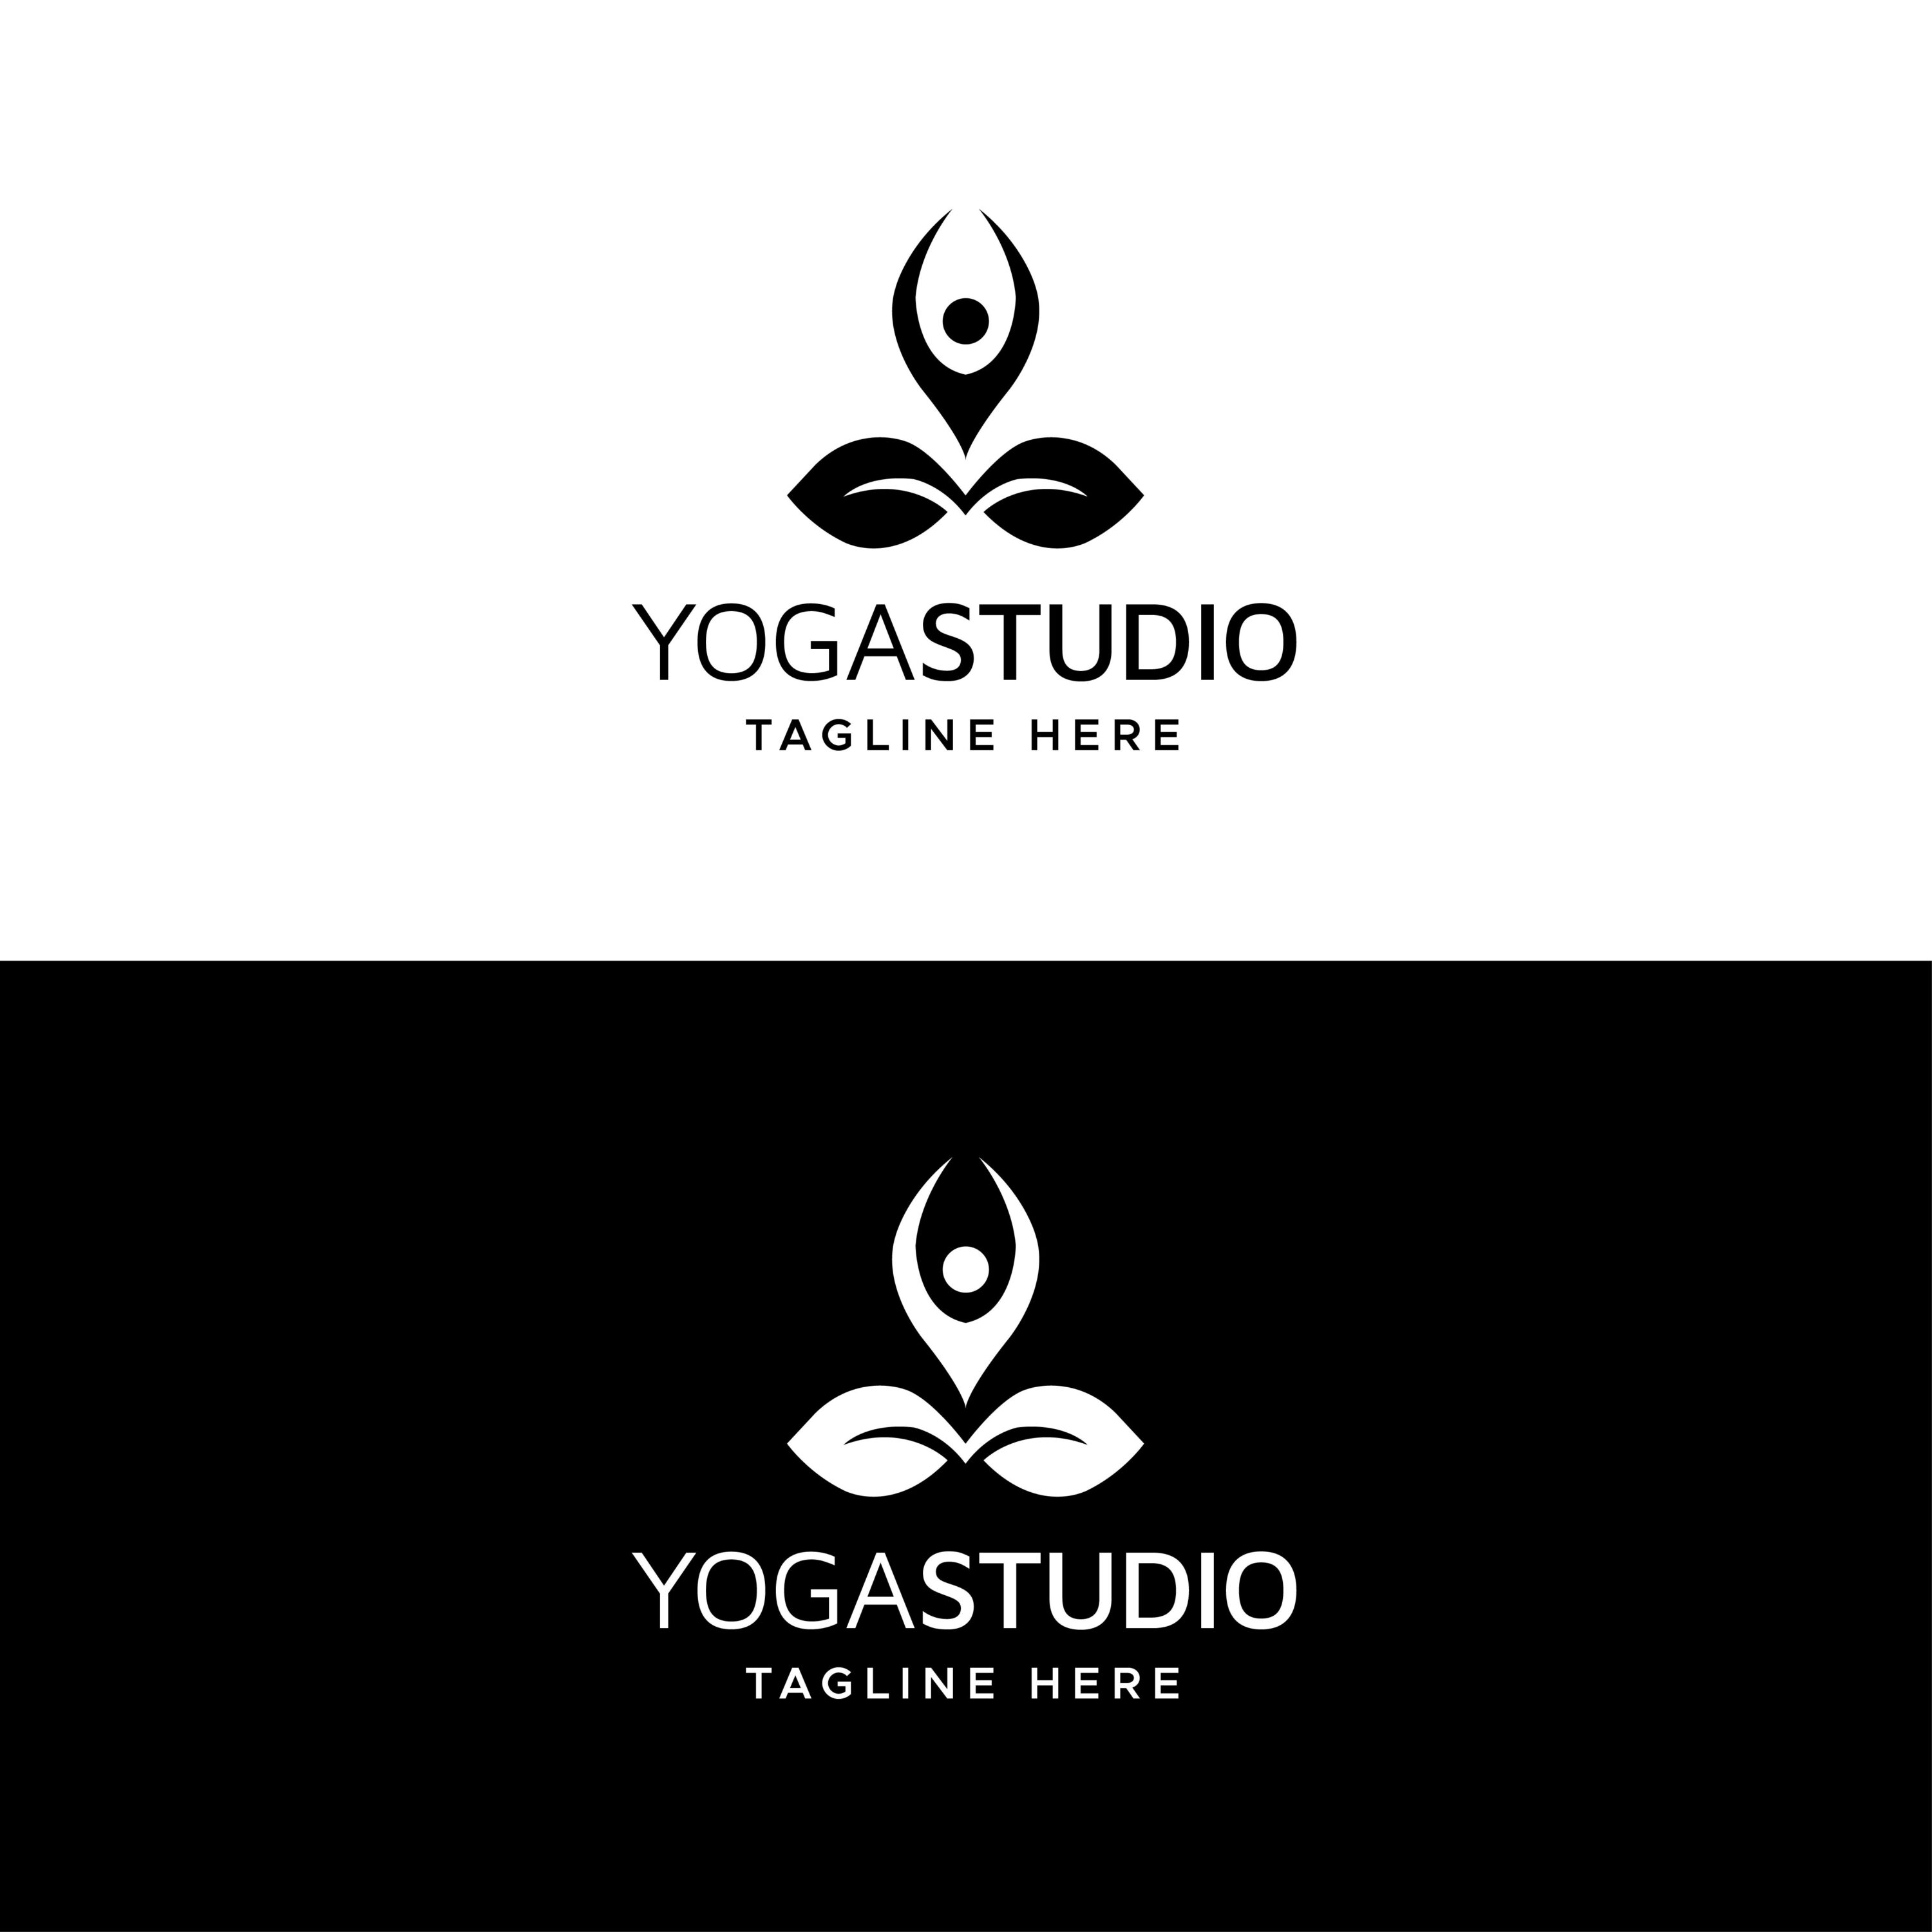 Calm Panda Logo For Sale | Panda Yoga Logo - Lobotz LTD